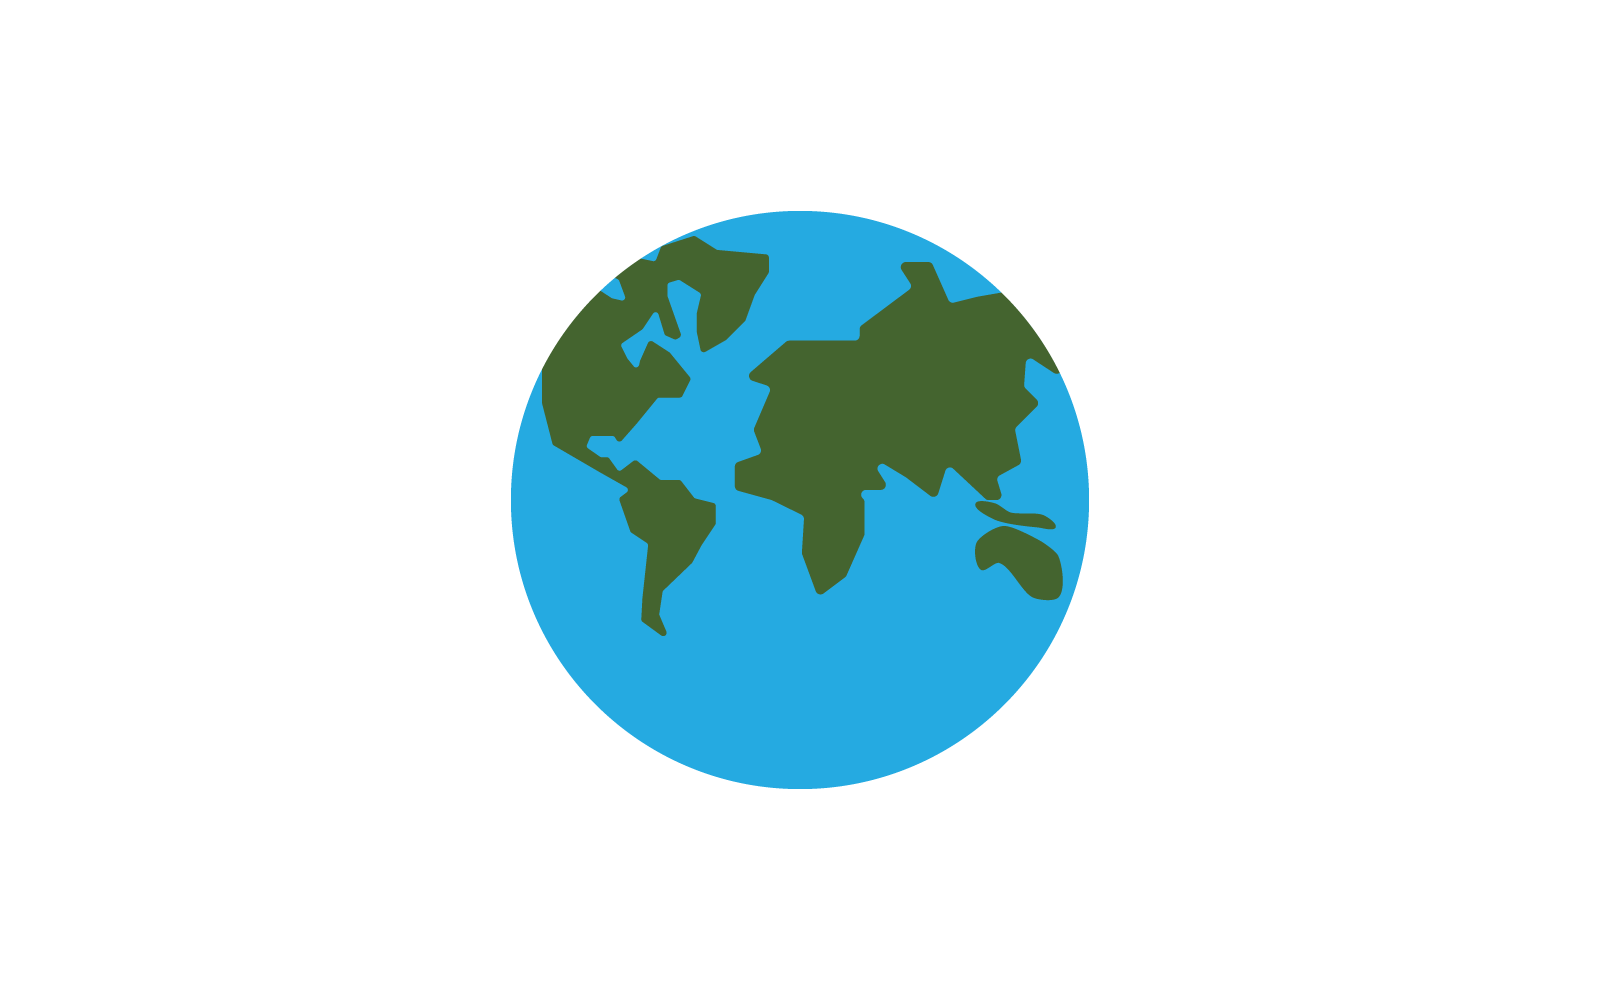 World map illustration vector design